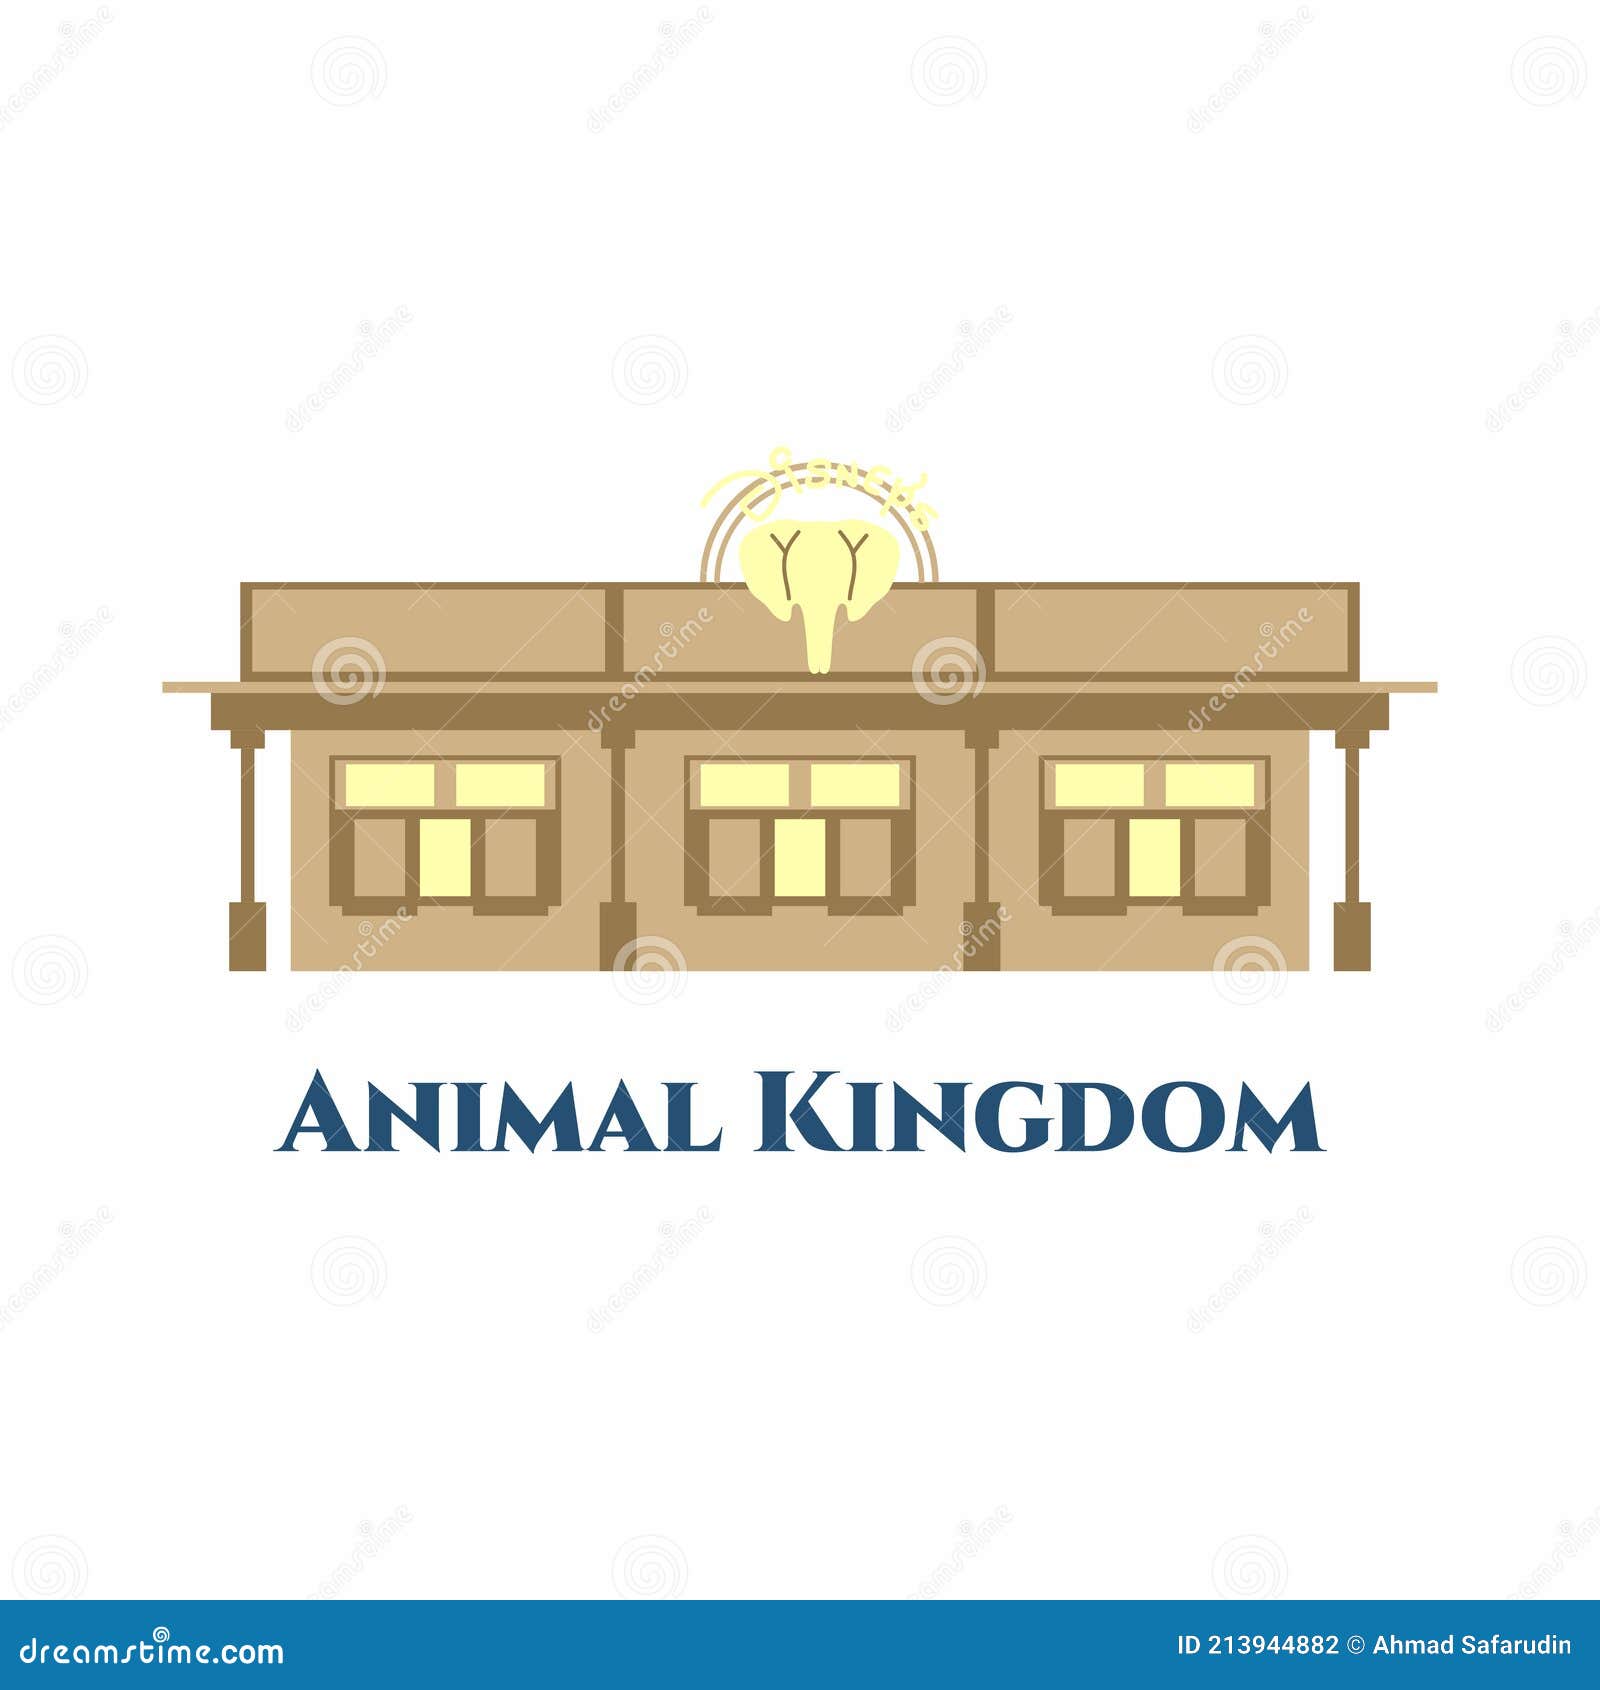 disney`s animal kingdom. it is a zoological theme park at the walt disney world resort in bay lake, florida, near orlando. one of